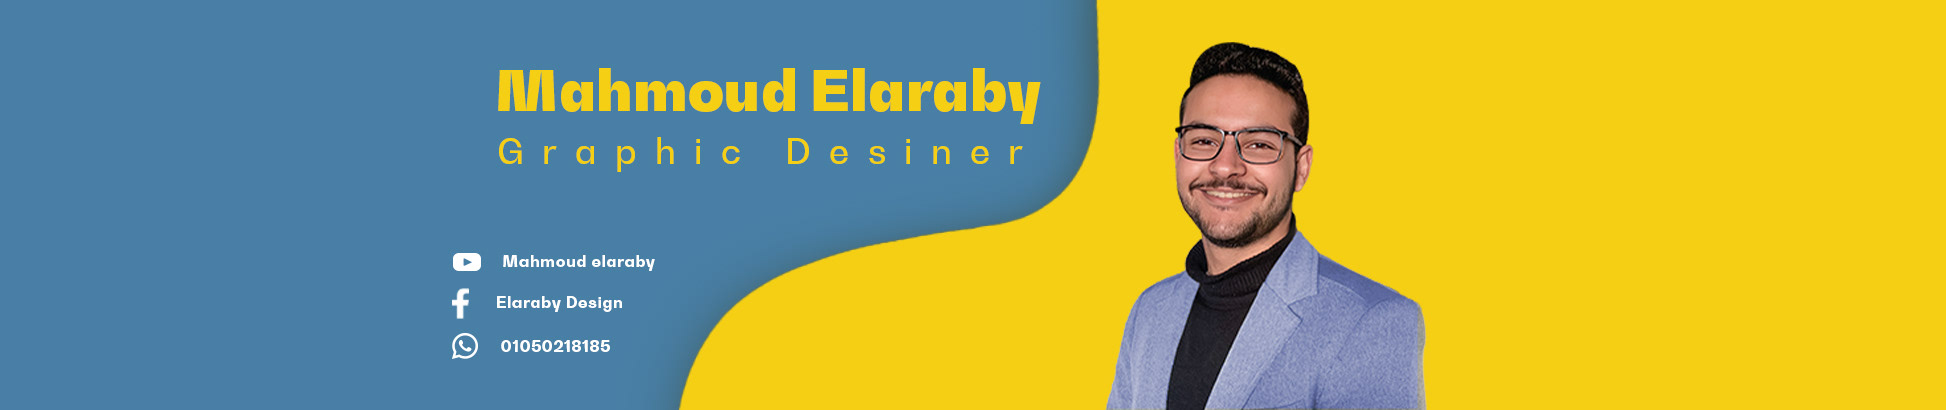 Mahmoud Elaraby's profile banner